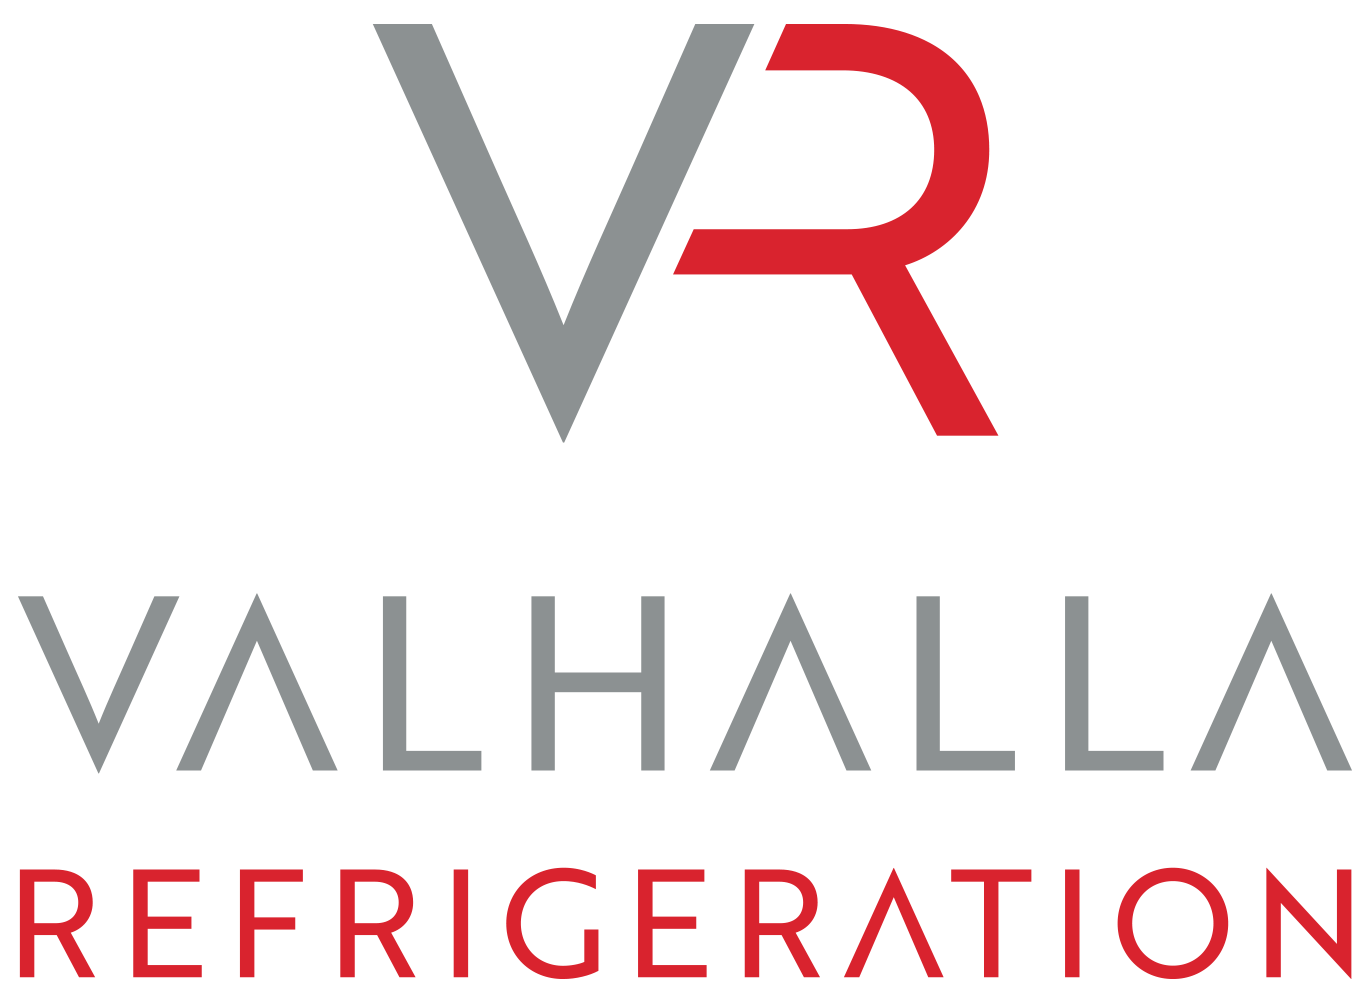 Valhalla Refrigeration in Castlegar BC, the Kootenays, logo design and brand identity